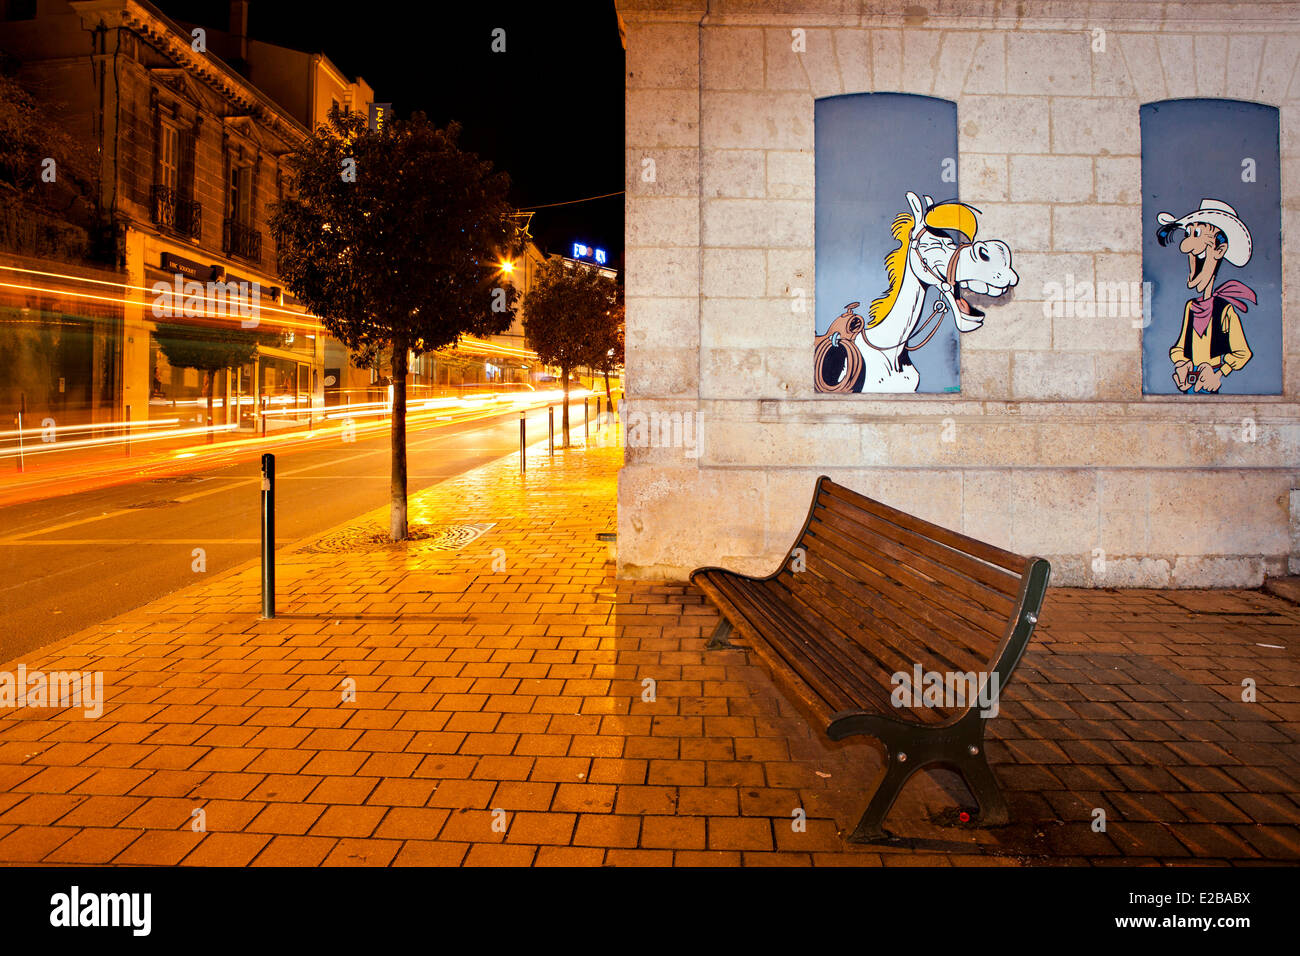 France, Charente, Angouleme, mural Les Dalton en prison (Dalton in jail) by Morris, Lucky Luke and Jolly Jumper, Avenue Gambetta Stock Photo